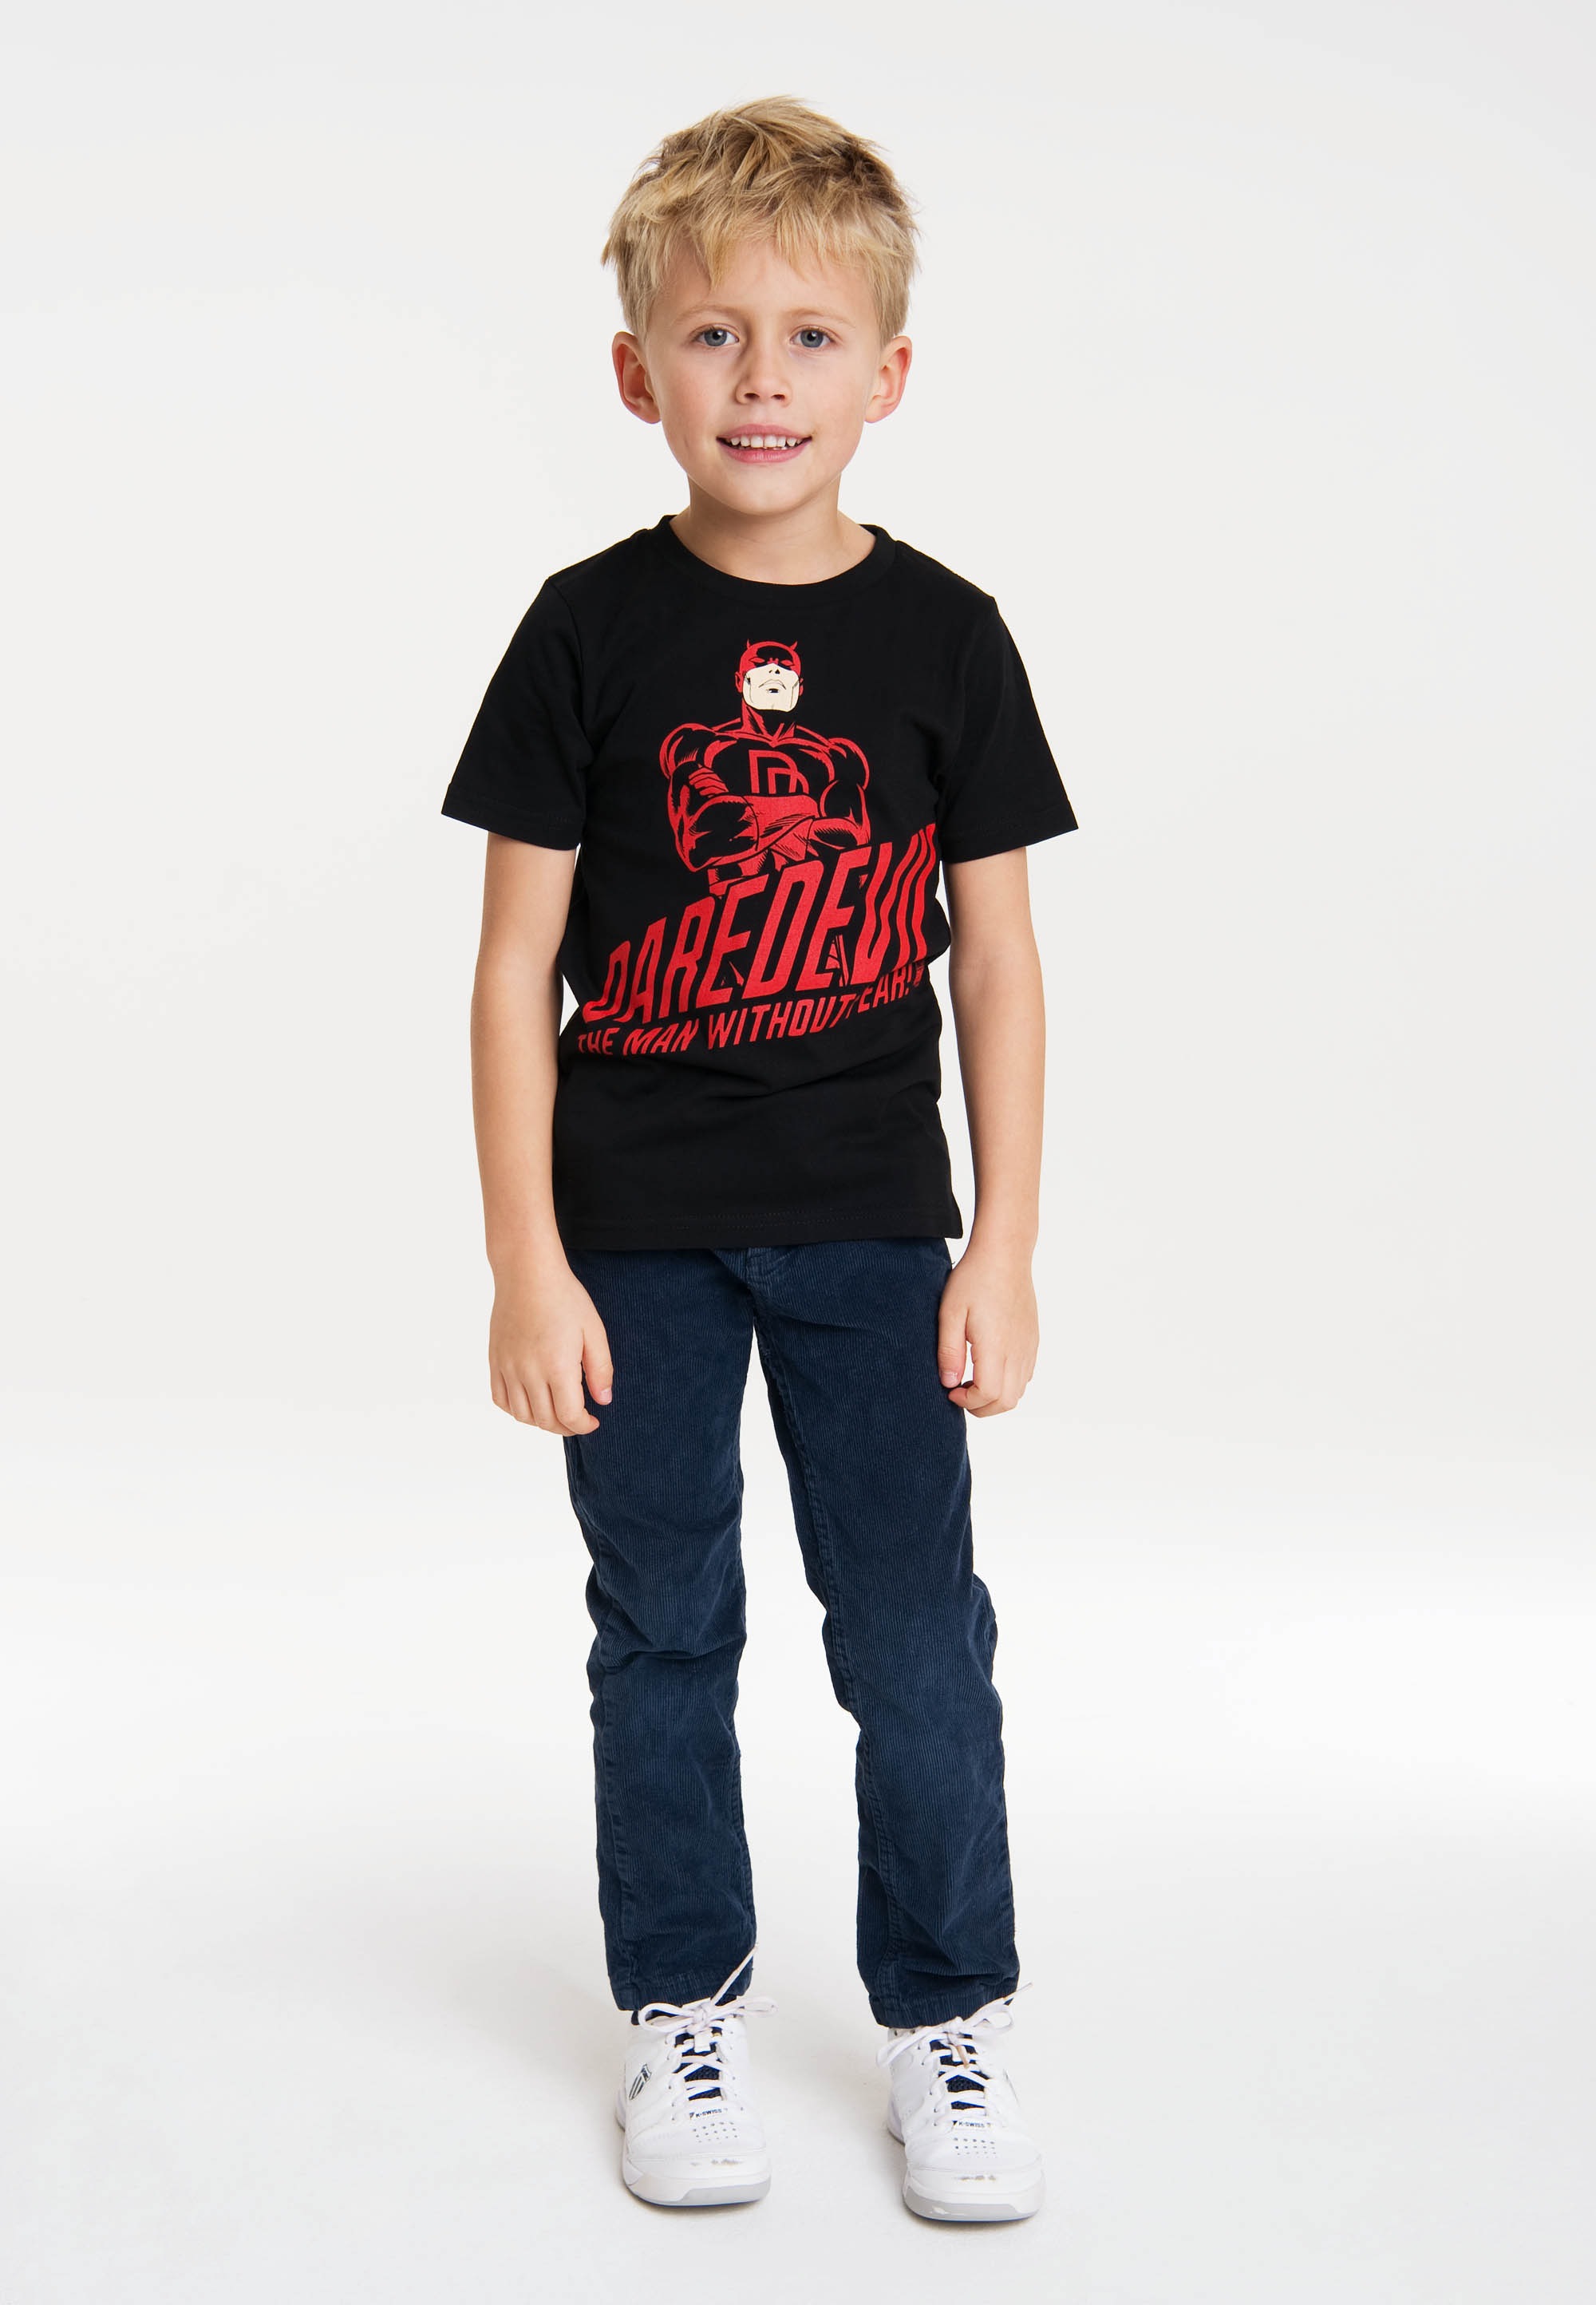 LOGOSHIRT T-Shirt »Marvel - Daredevil - Man Without Fear«, mit coolem Daredevil-Print